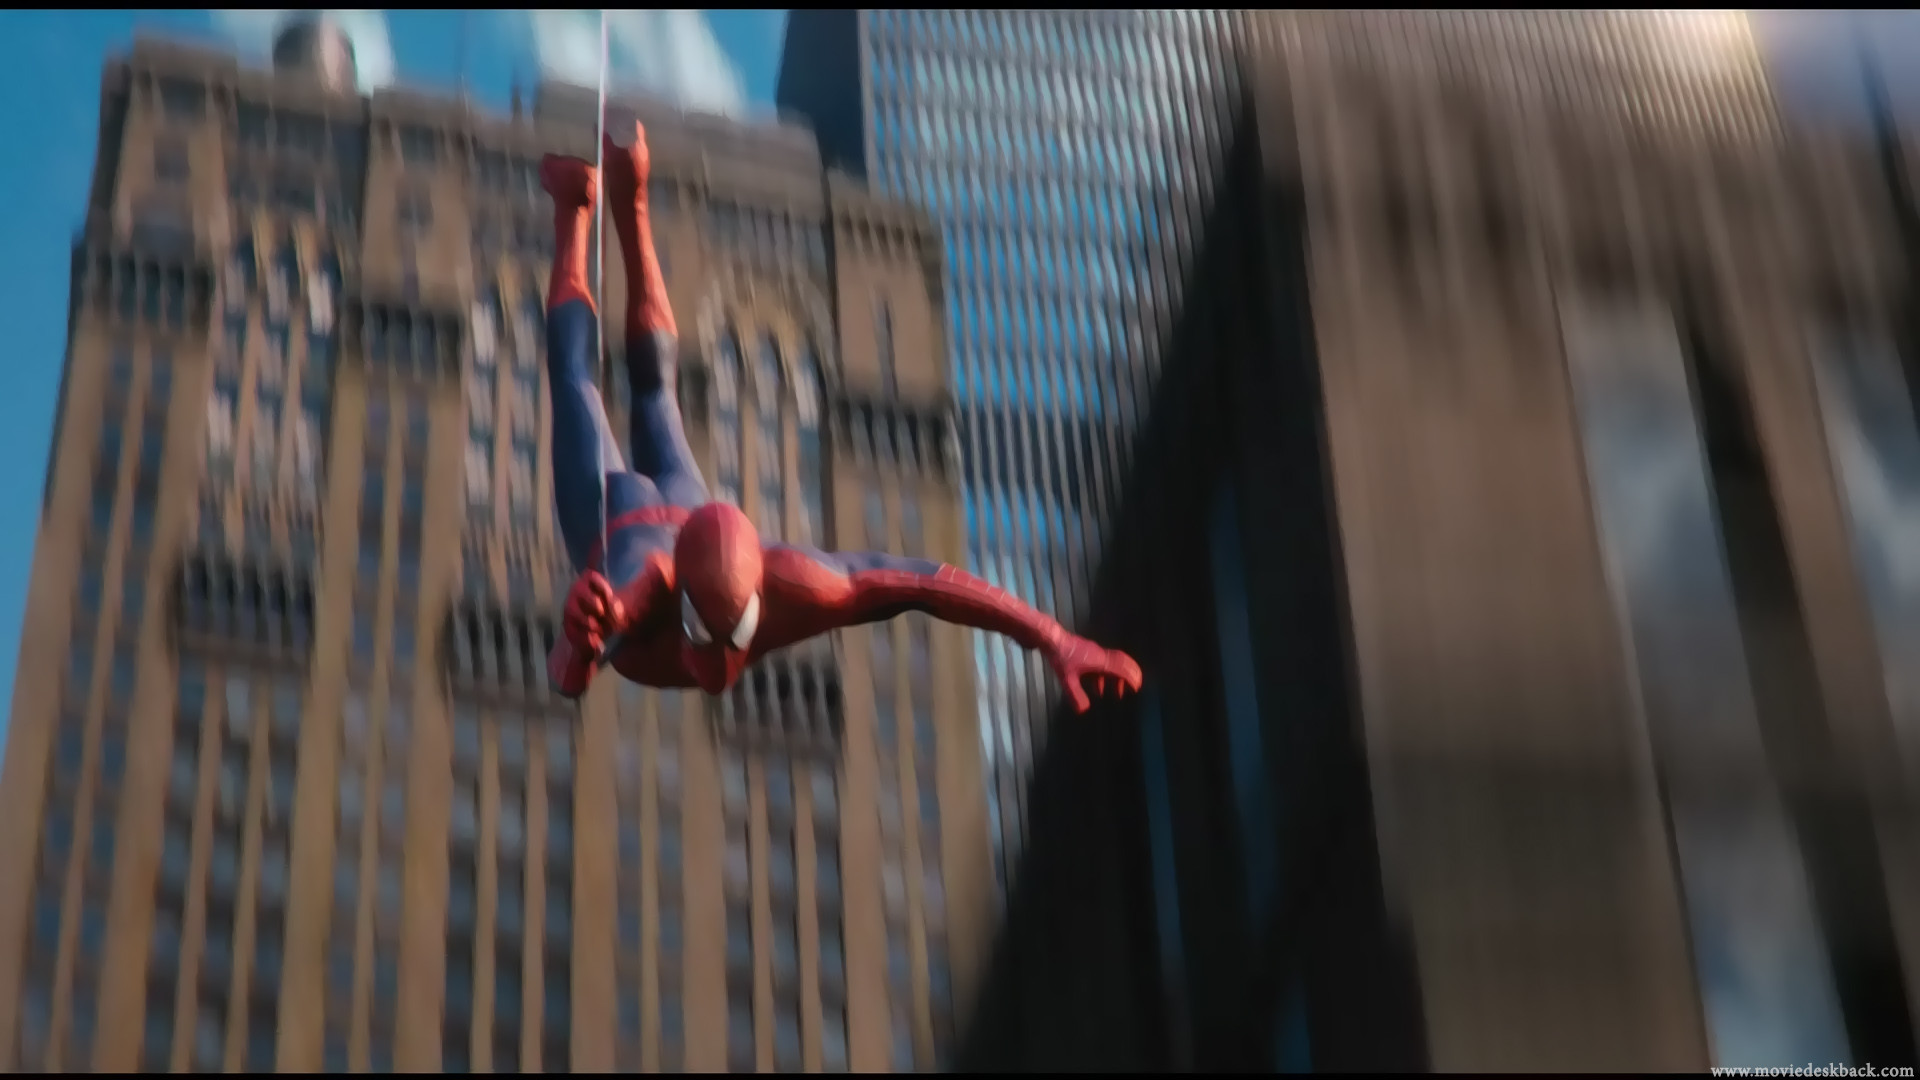 Ibarra sophie rain spiderman video проверь. Университет Эмпайр Стейт человек паук. Человек паук падает. Человек паук в прыжке. Человек паук на крыше.